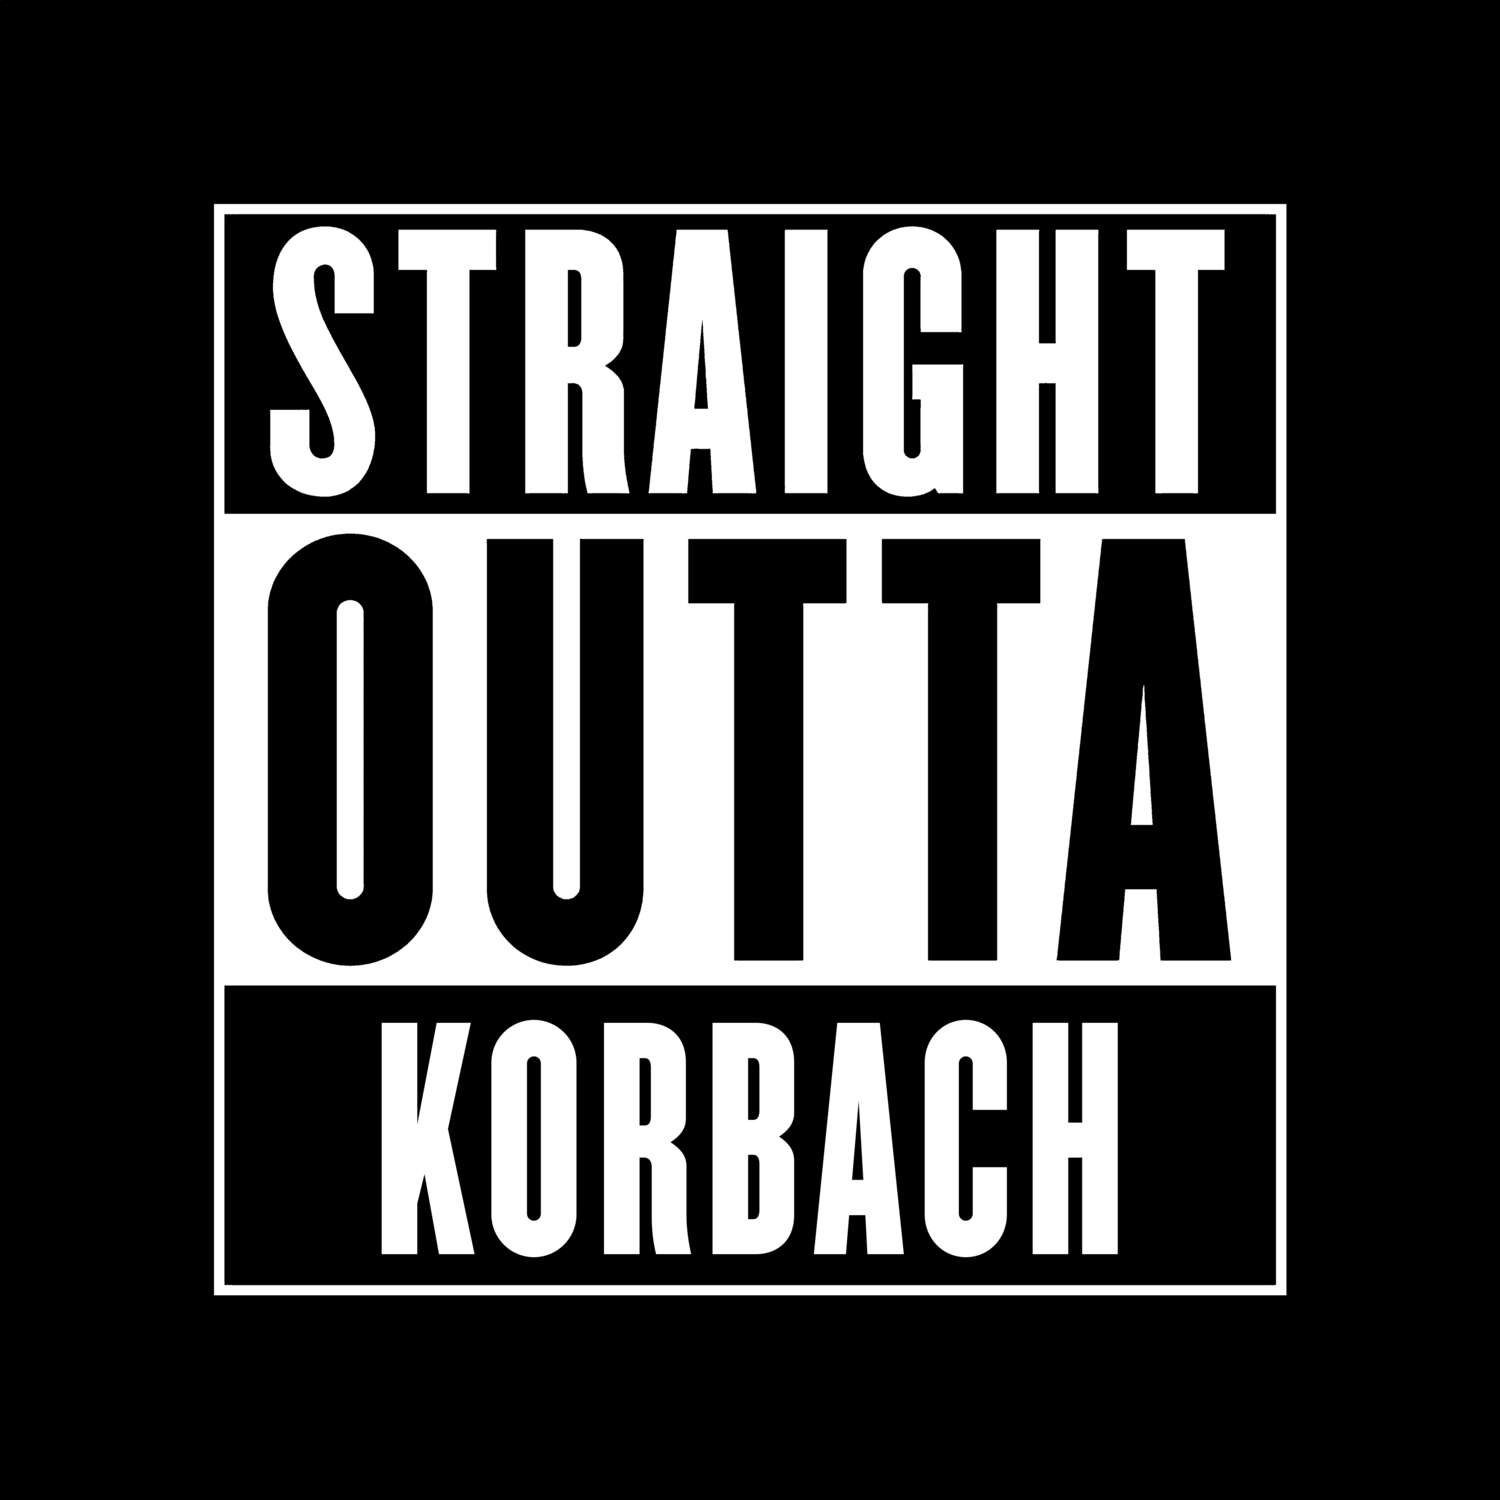 Korbach T-Shirt »Straight Outta«